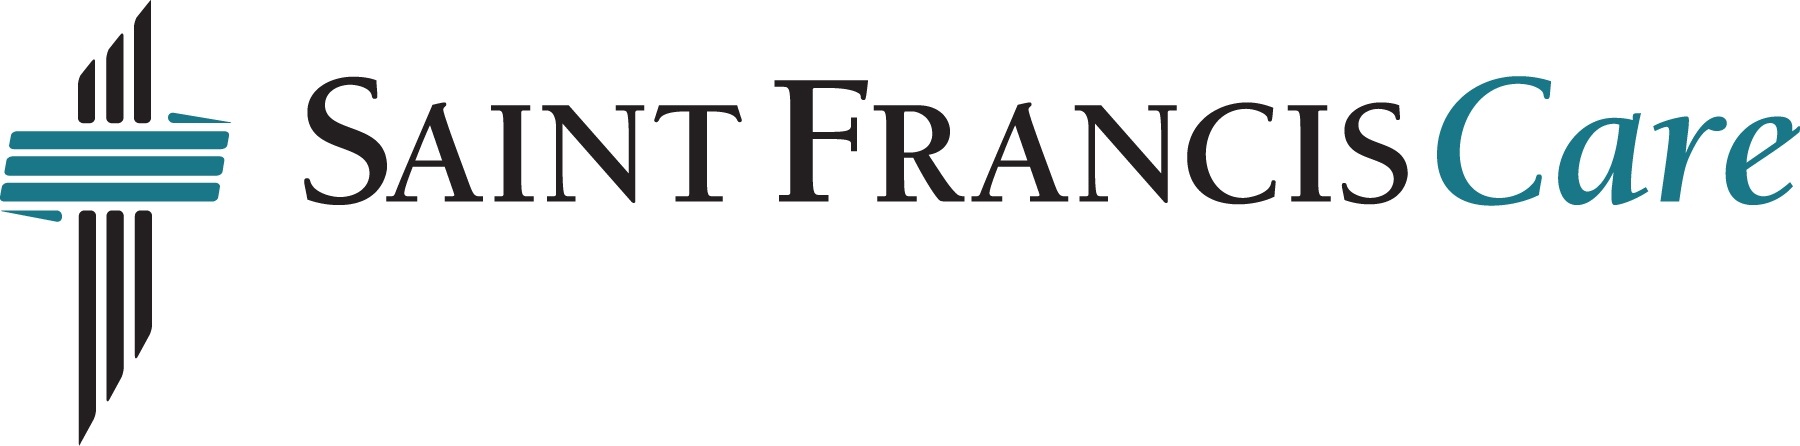 saint francis care logo